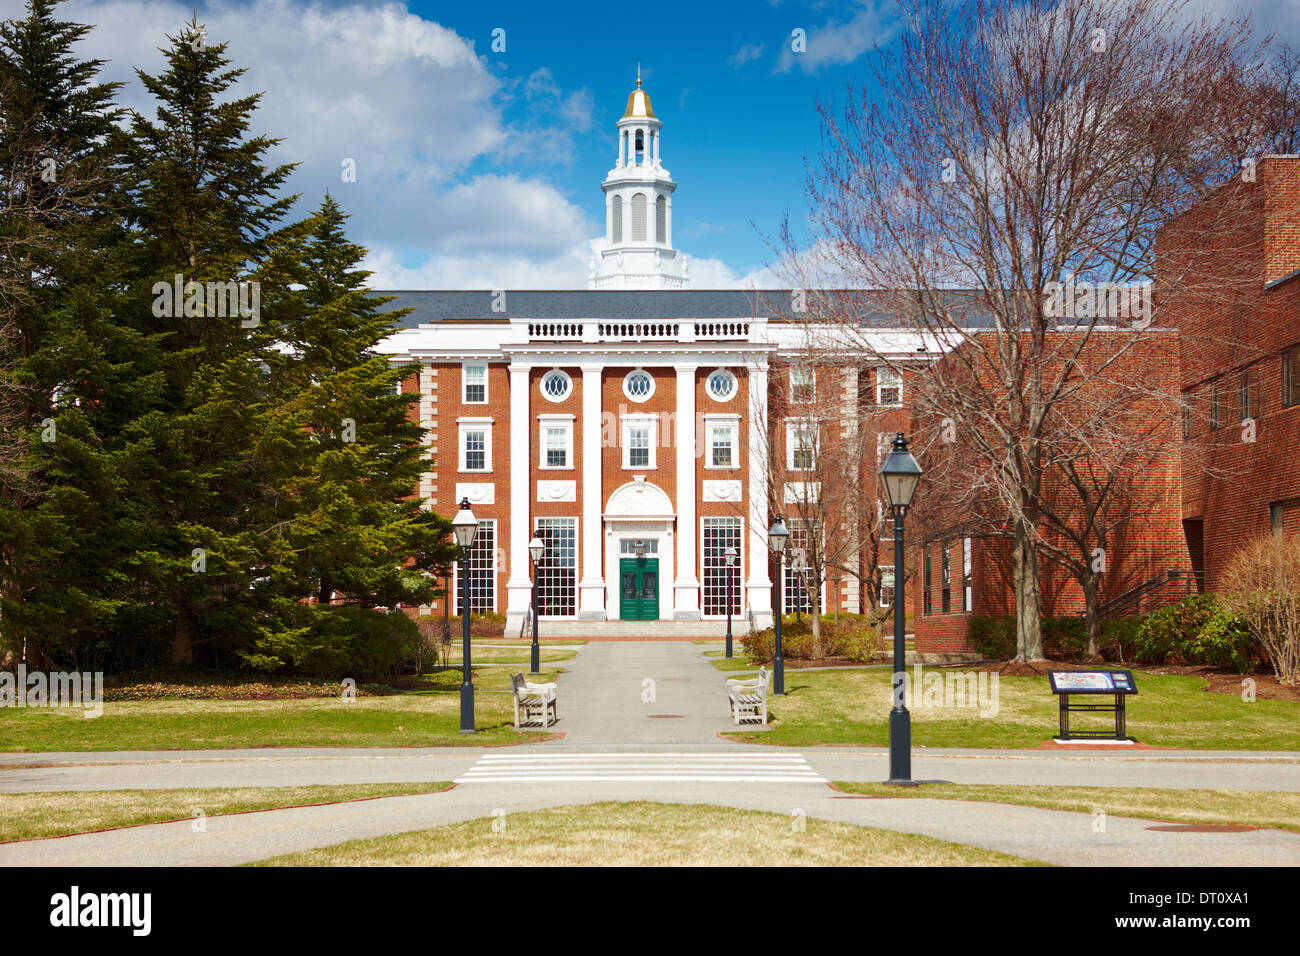 06.04.2011, USA, Harvard University, Bloomberg Stock Photo